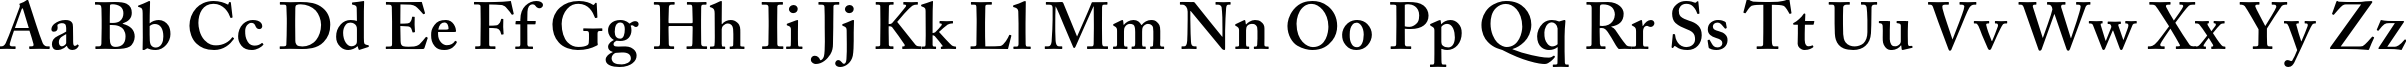 Пример написания английского алфавита шрифтом Adobe Caslon Pro Semibold